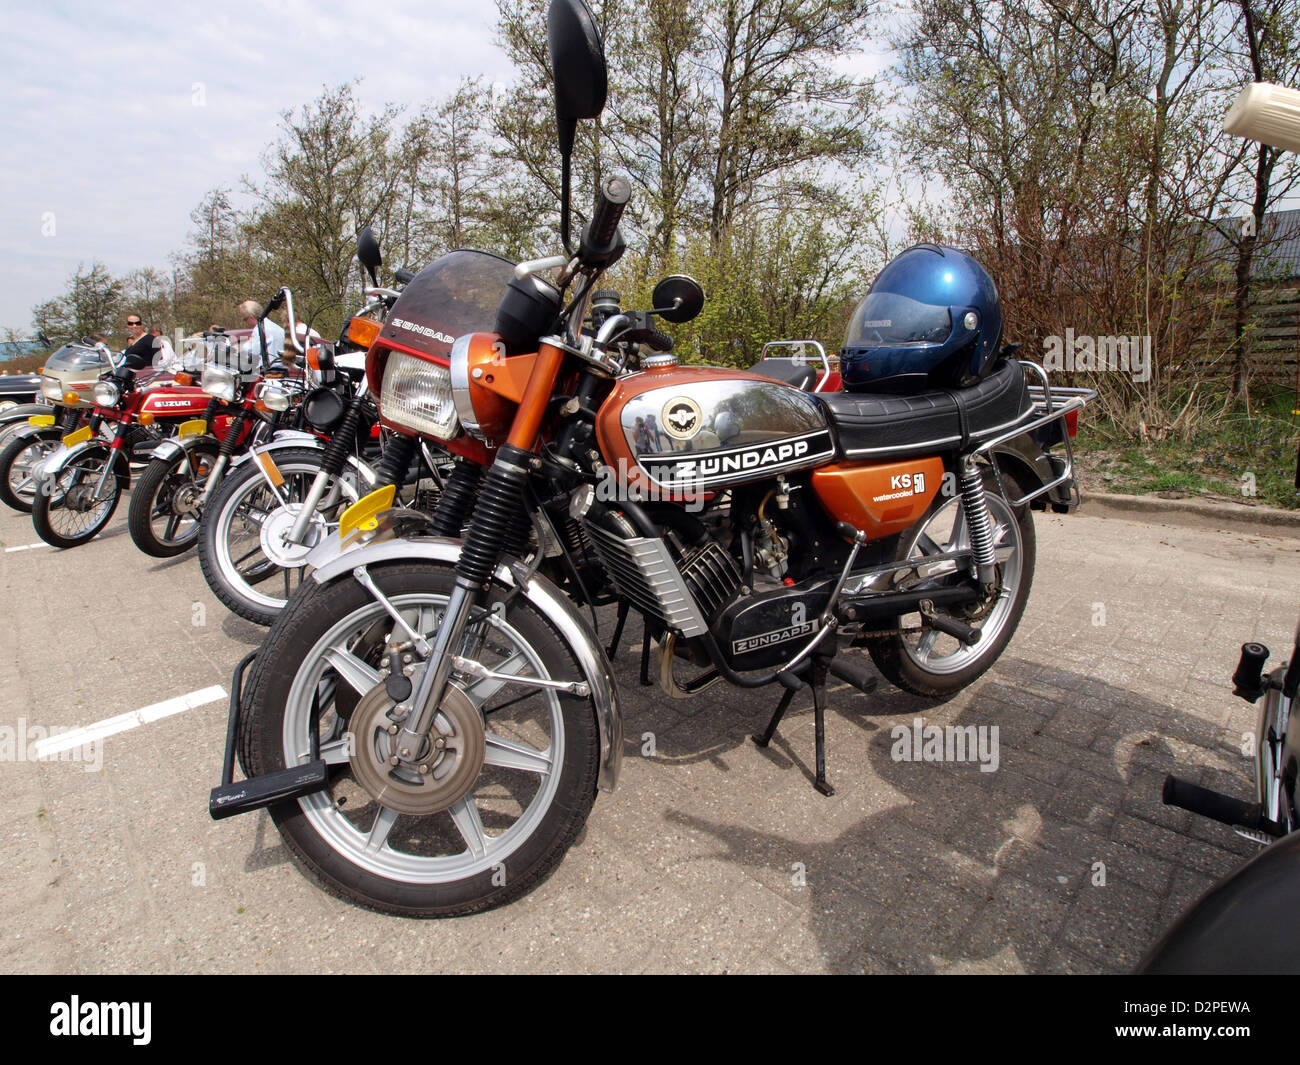 Zündapp motorcycles zundapp Stock Photo - Alamy